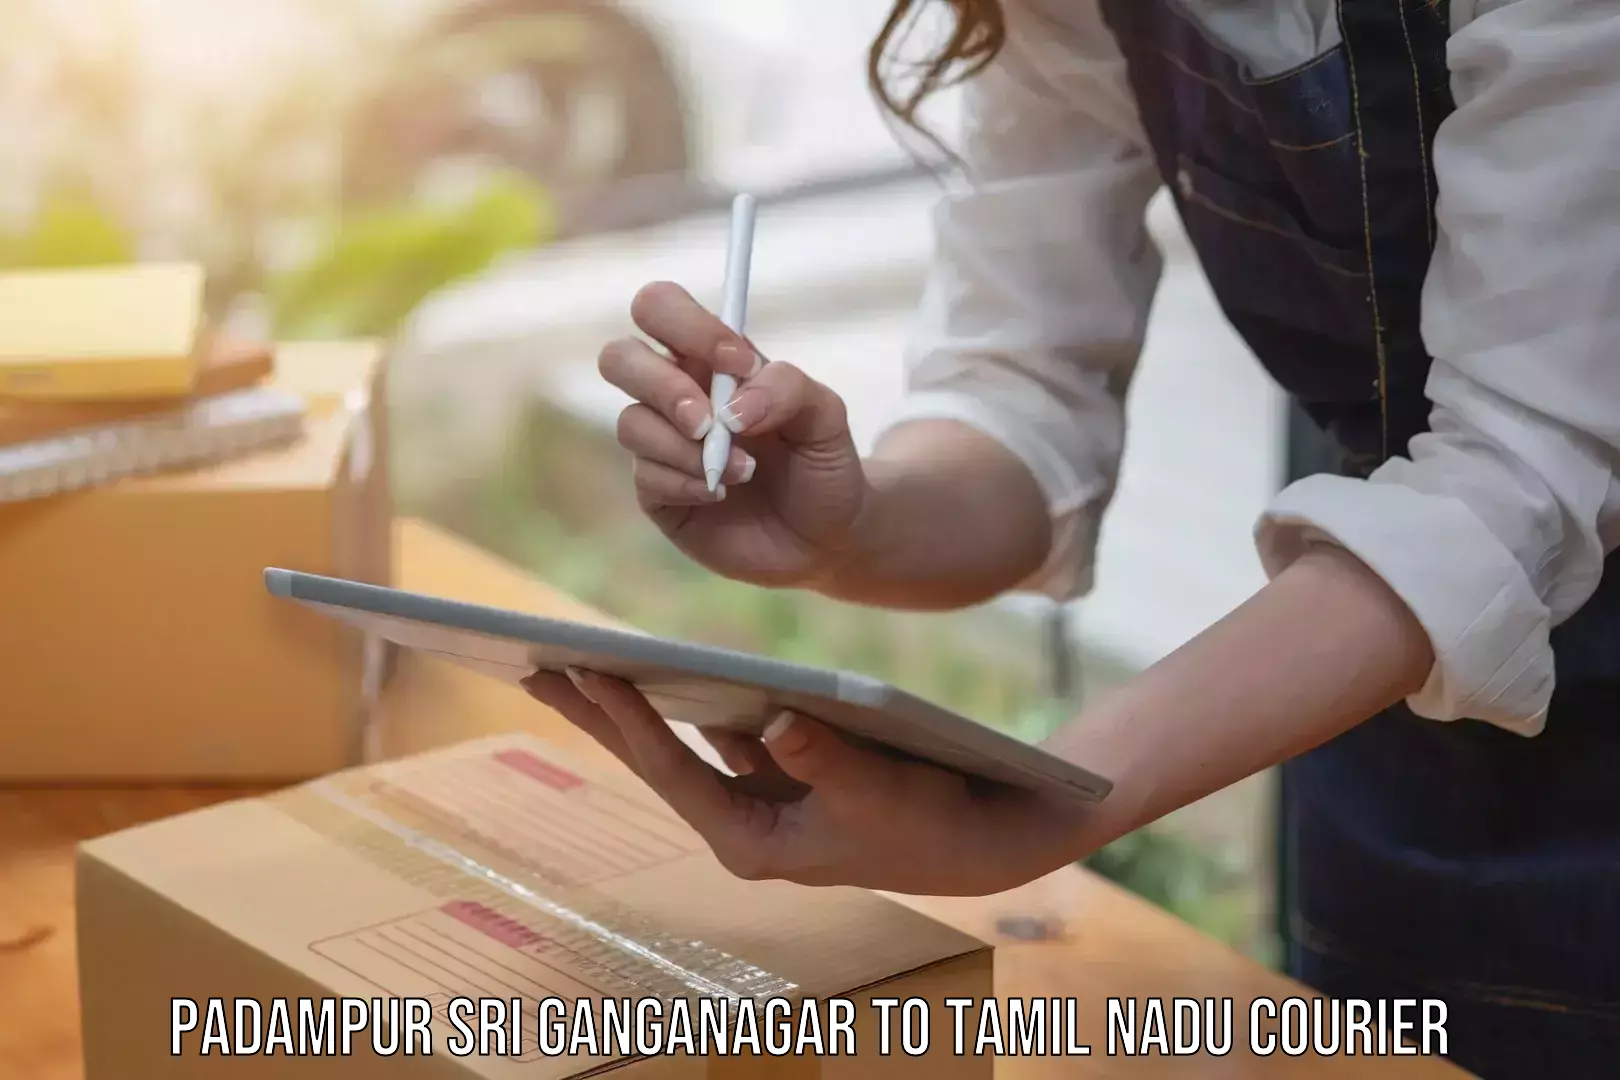 High-performance logistics Padampur Sri Ganganagar to Tamil Nadu